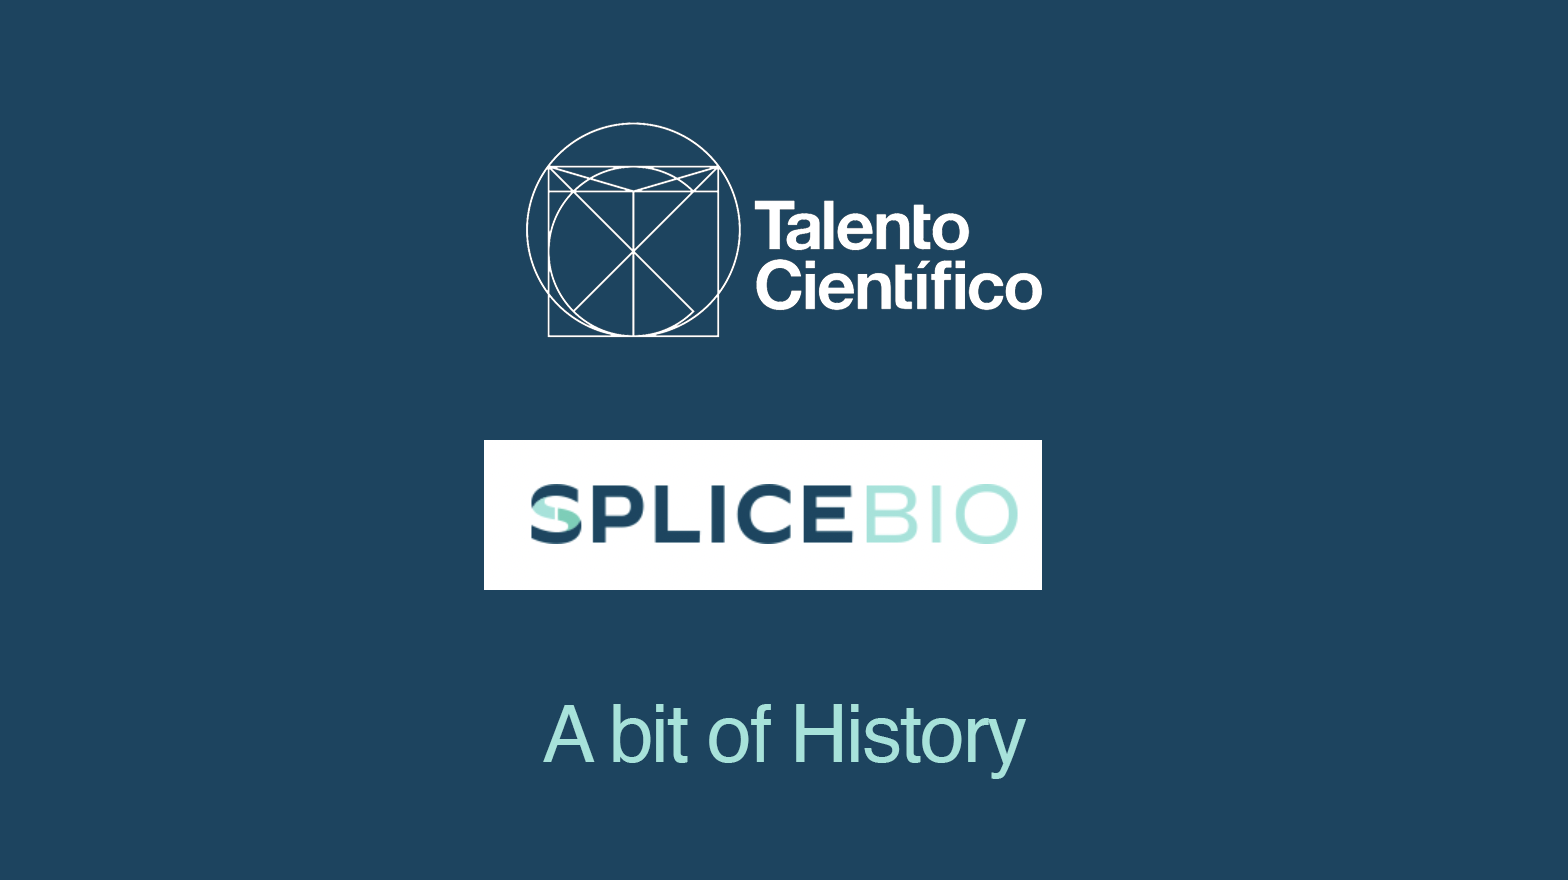 A bit of History in SpliceBio